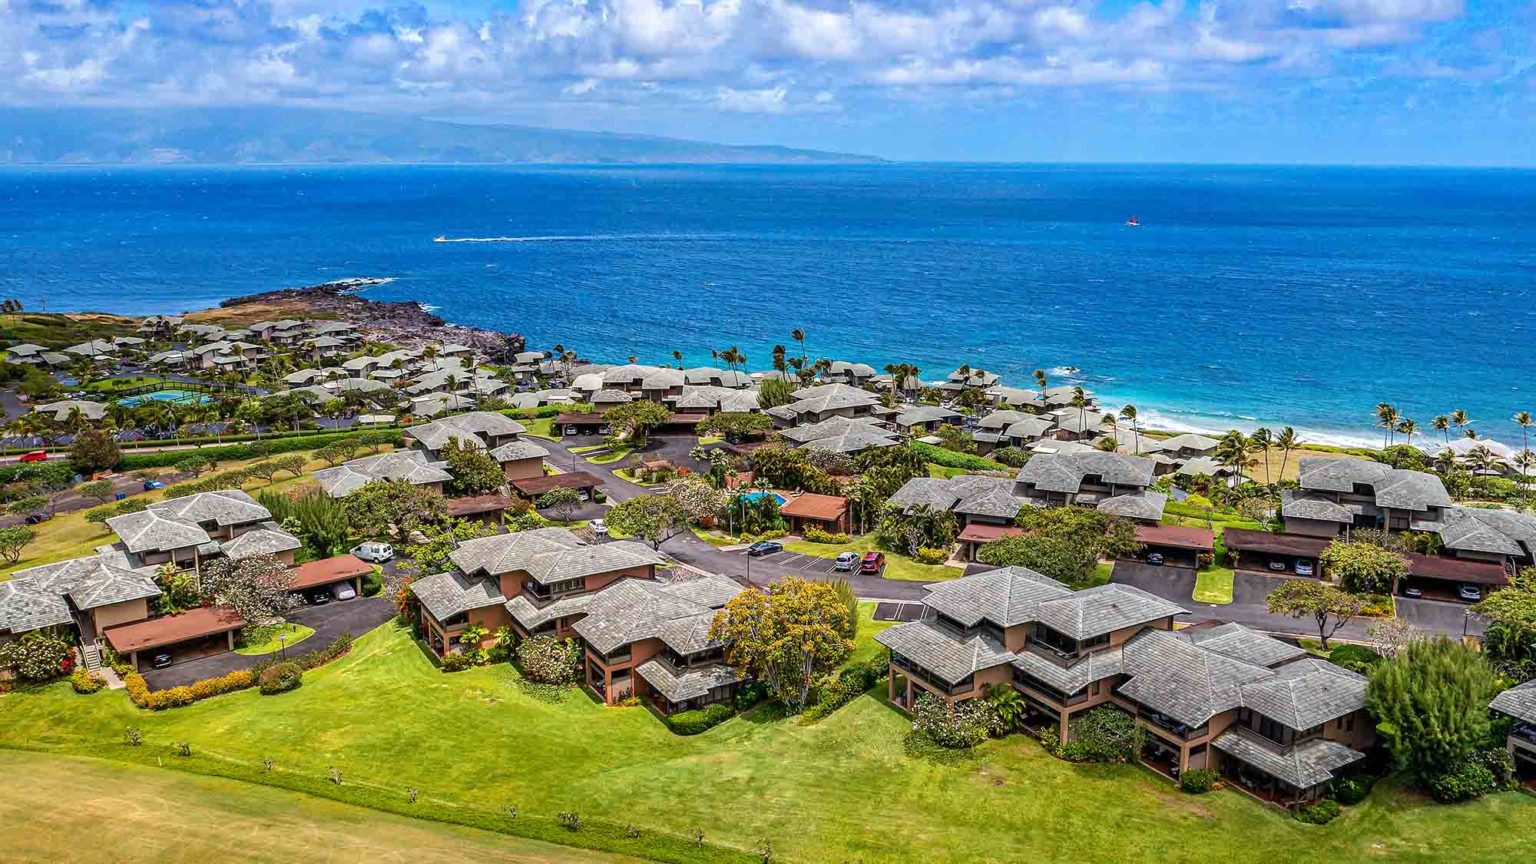 Kapalua Ridge Villas Vacation Rentals Maui The Parrish Collection Maui